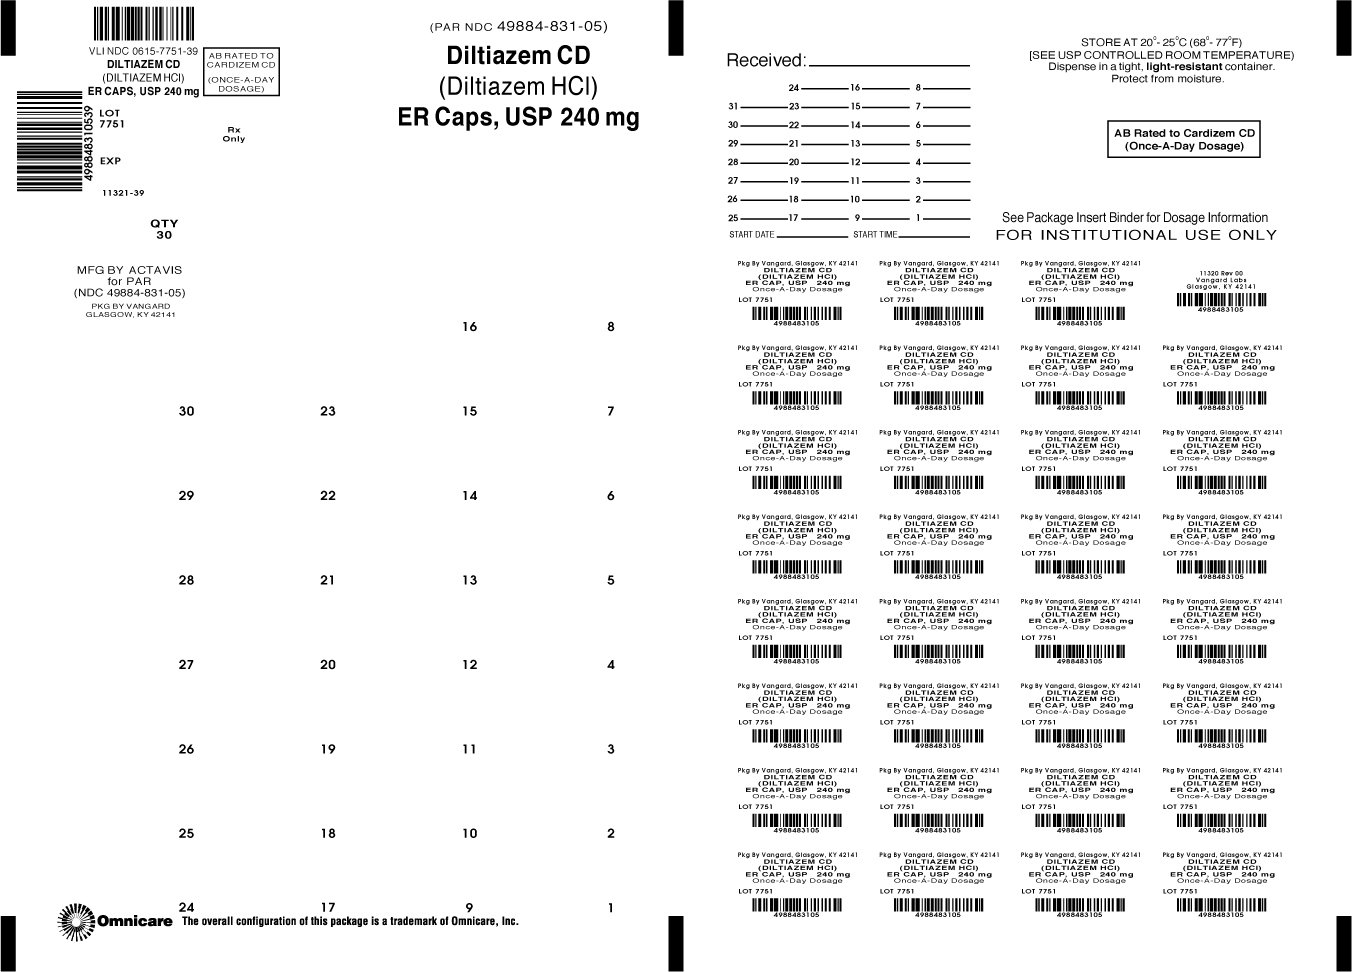 Principal Display Panel- Diltiazem CD ER Caps, USP 240mg